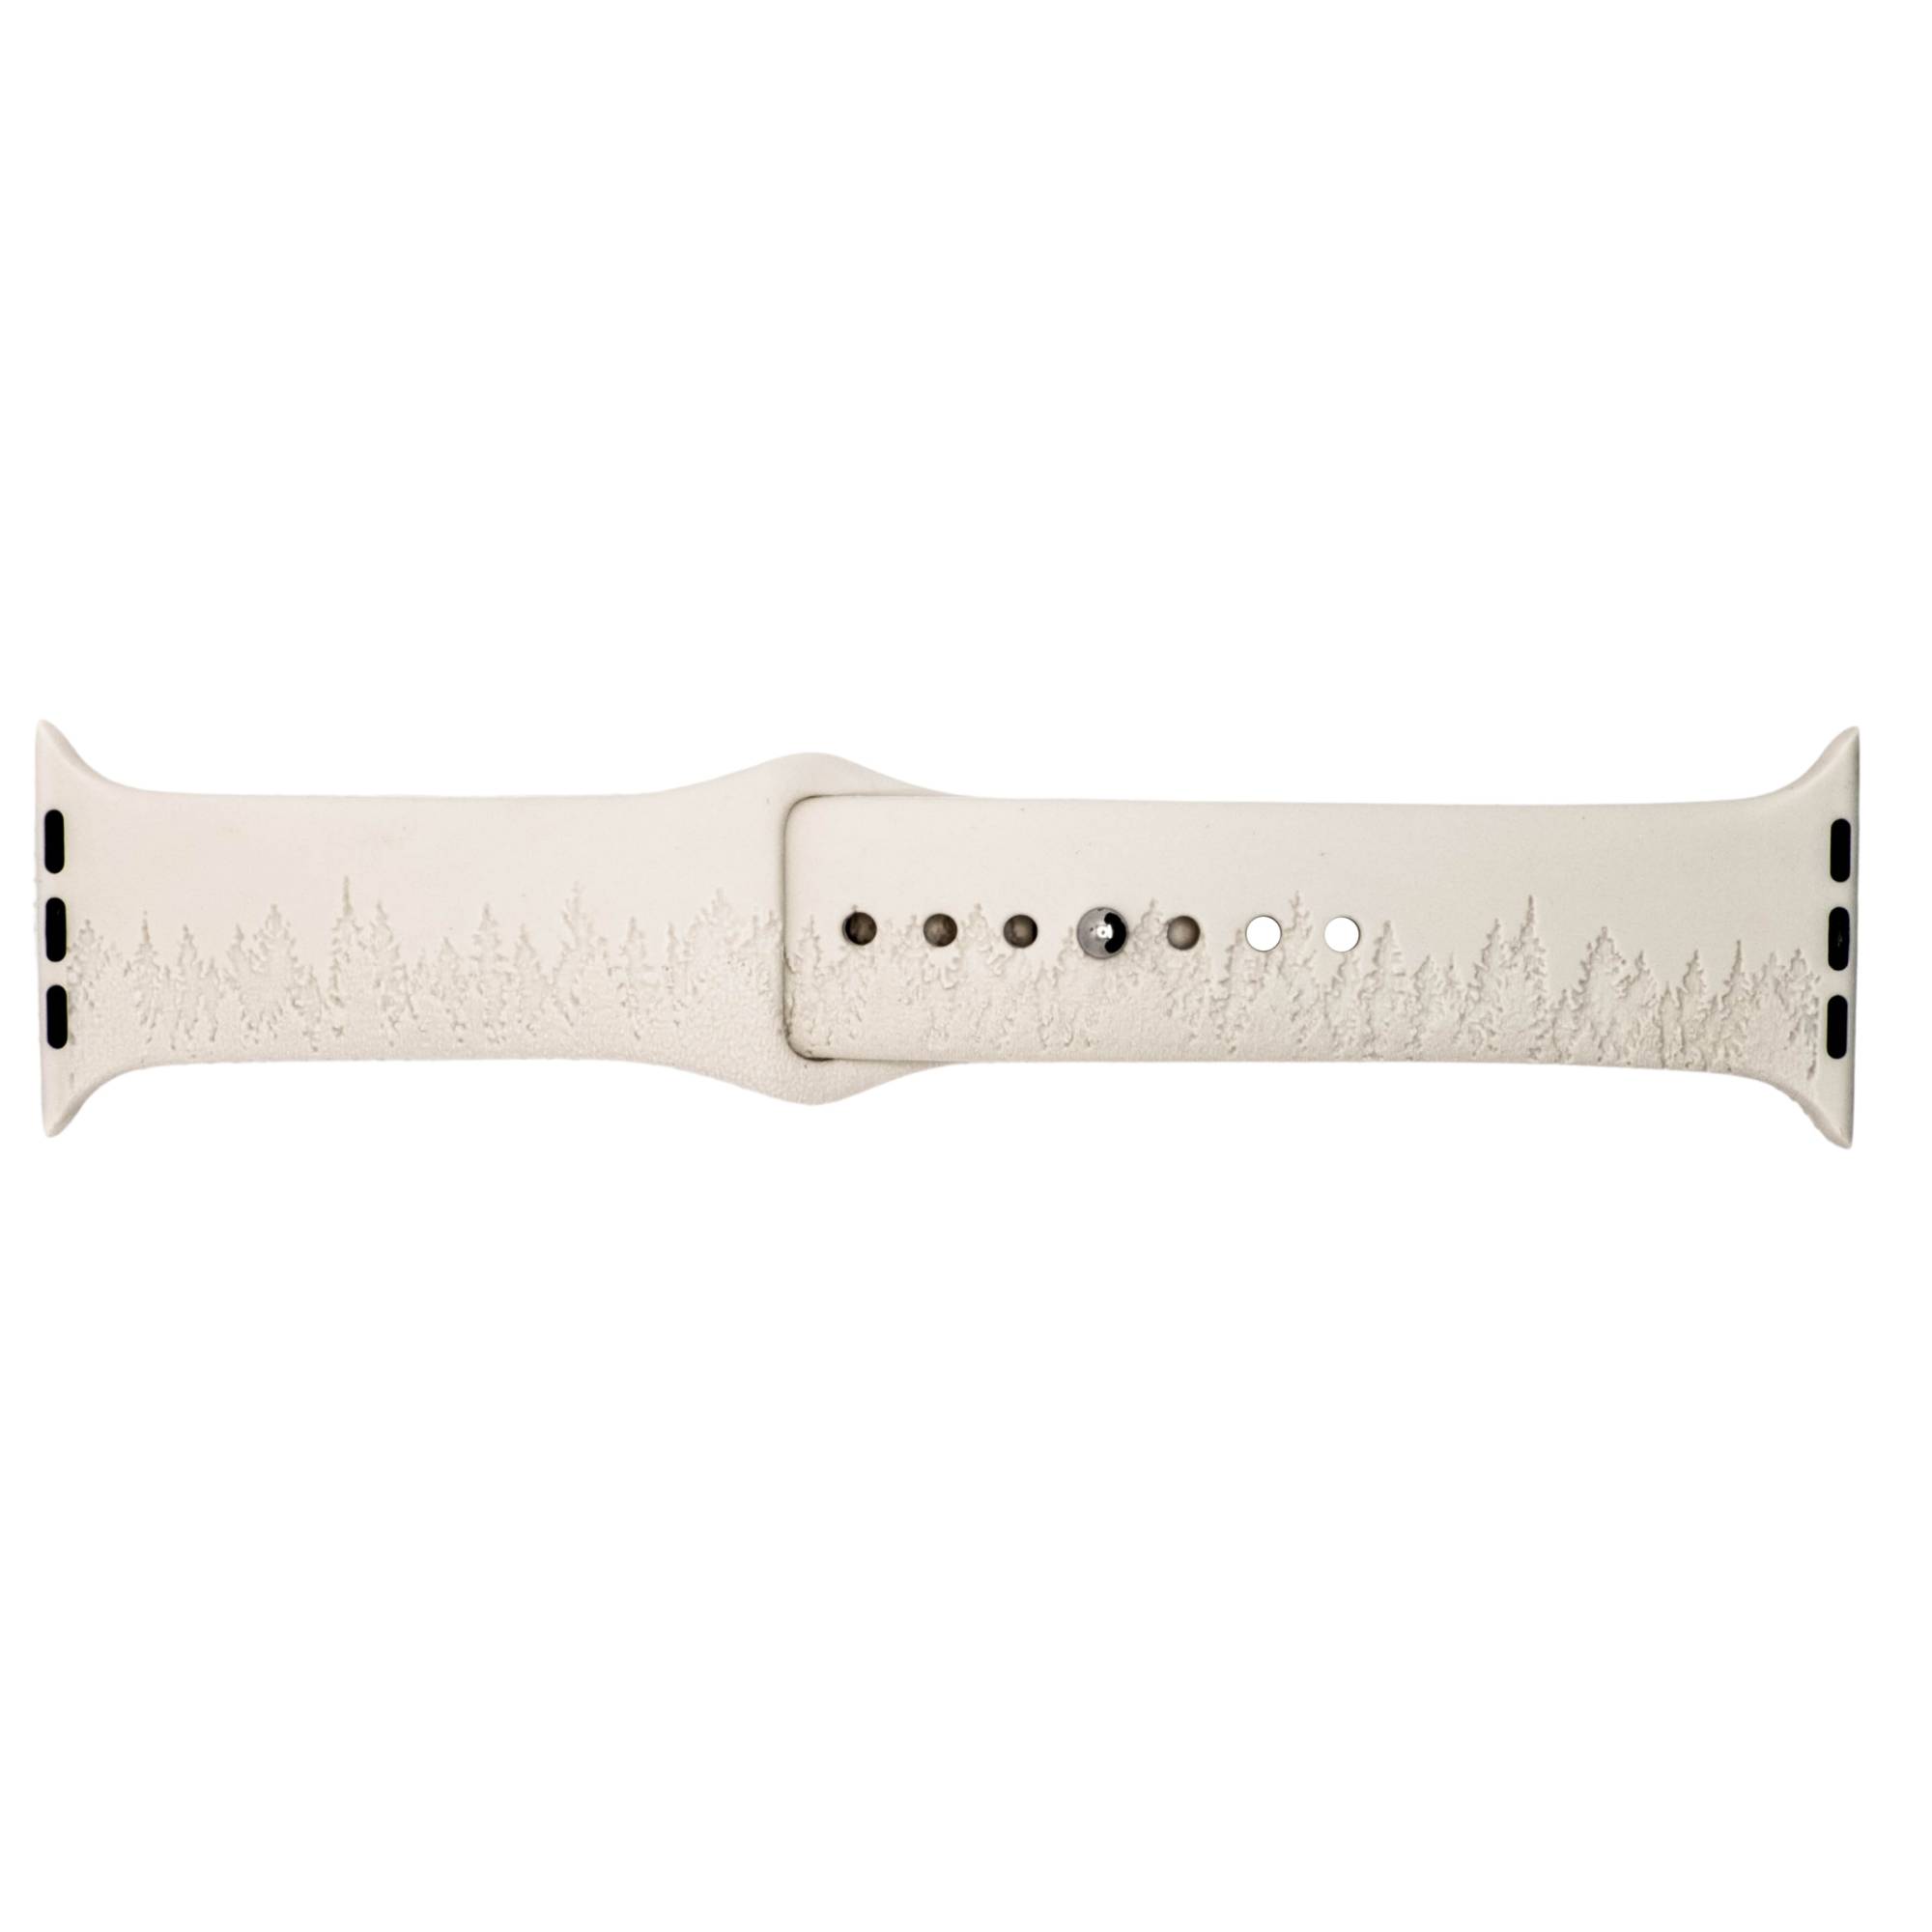 Louis Vuitton Apple Watch Band 42mm 44mm 45mm - Laser color